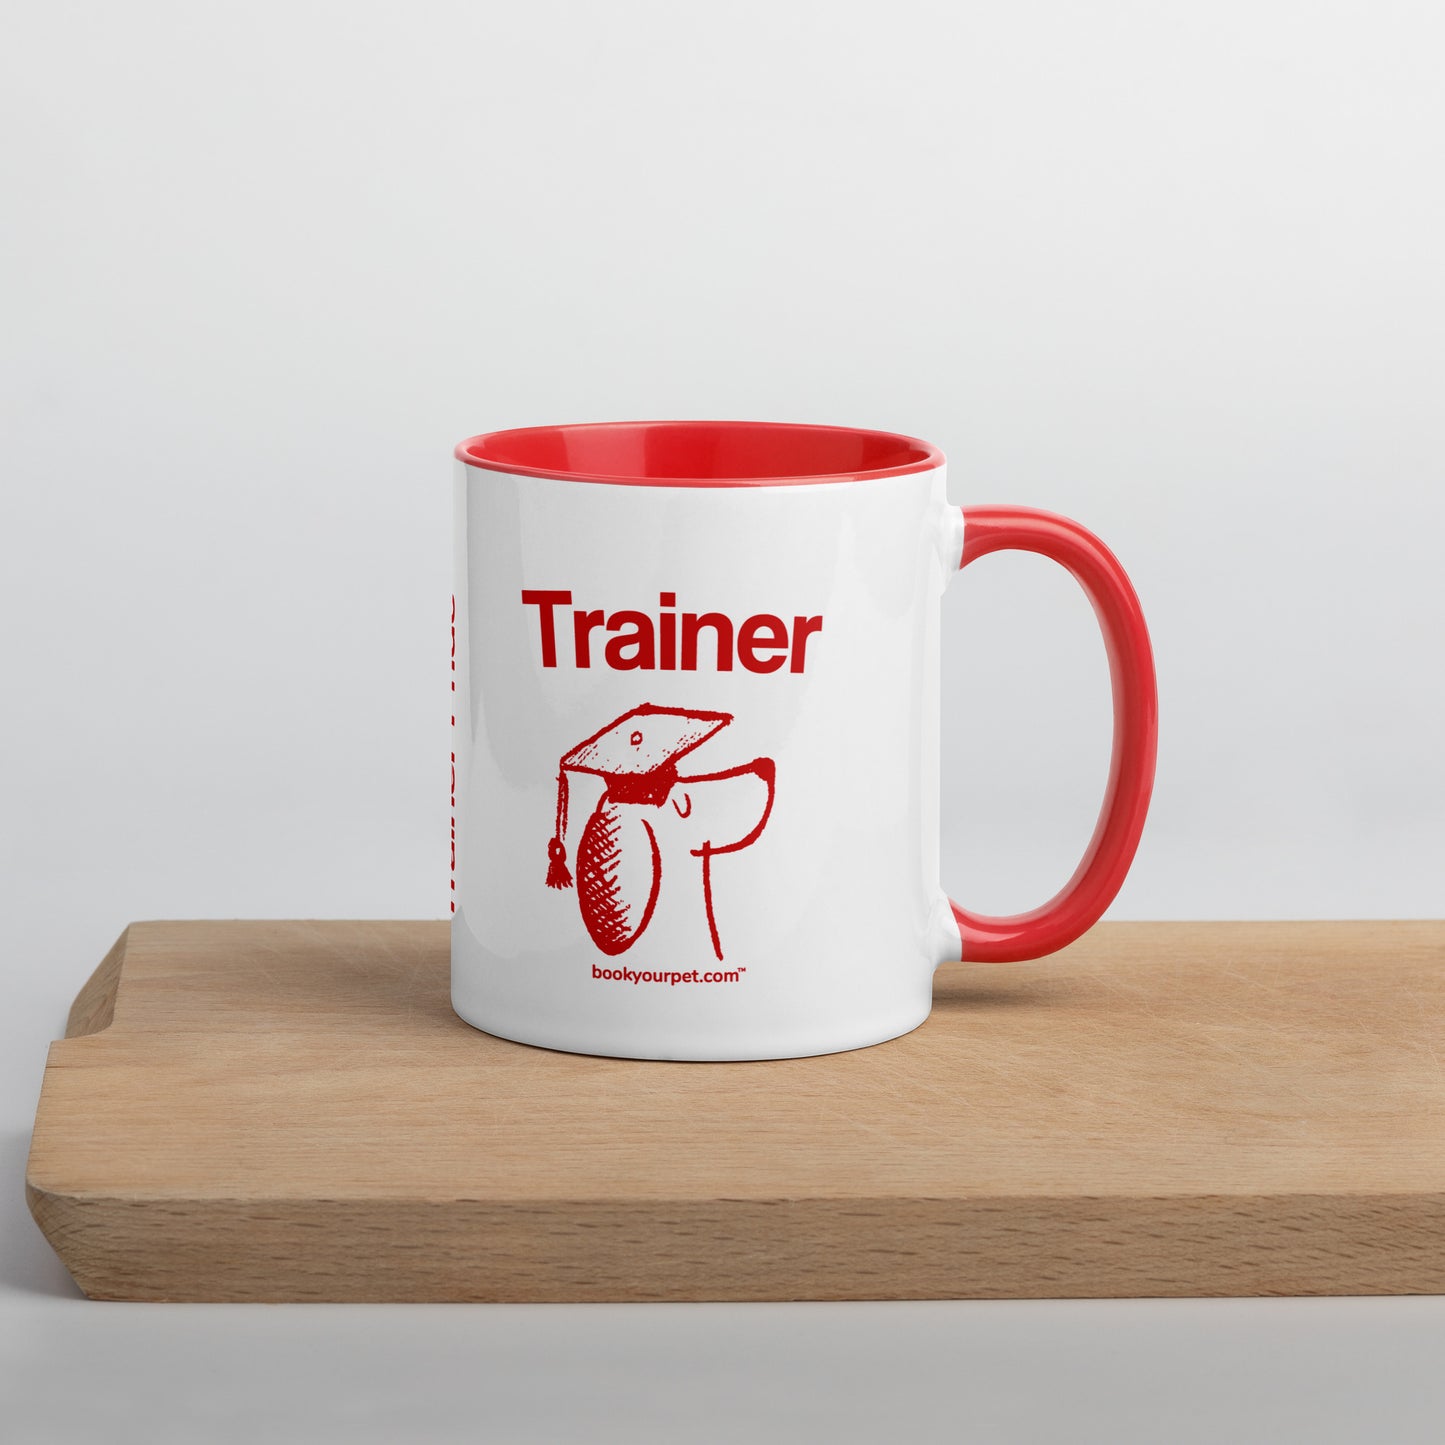 Trainer Mug